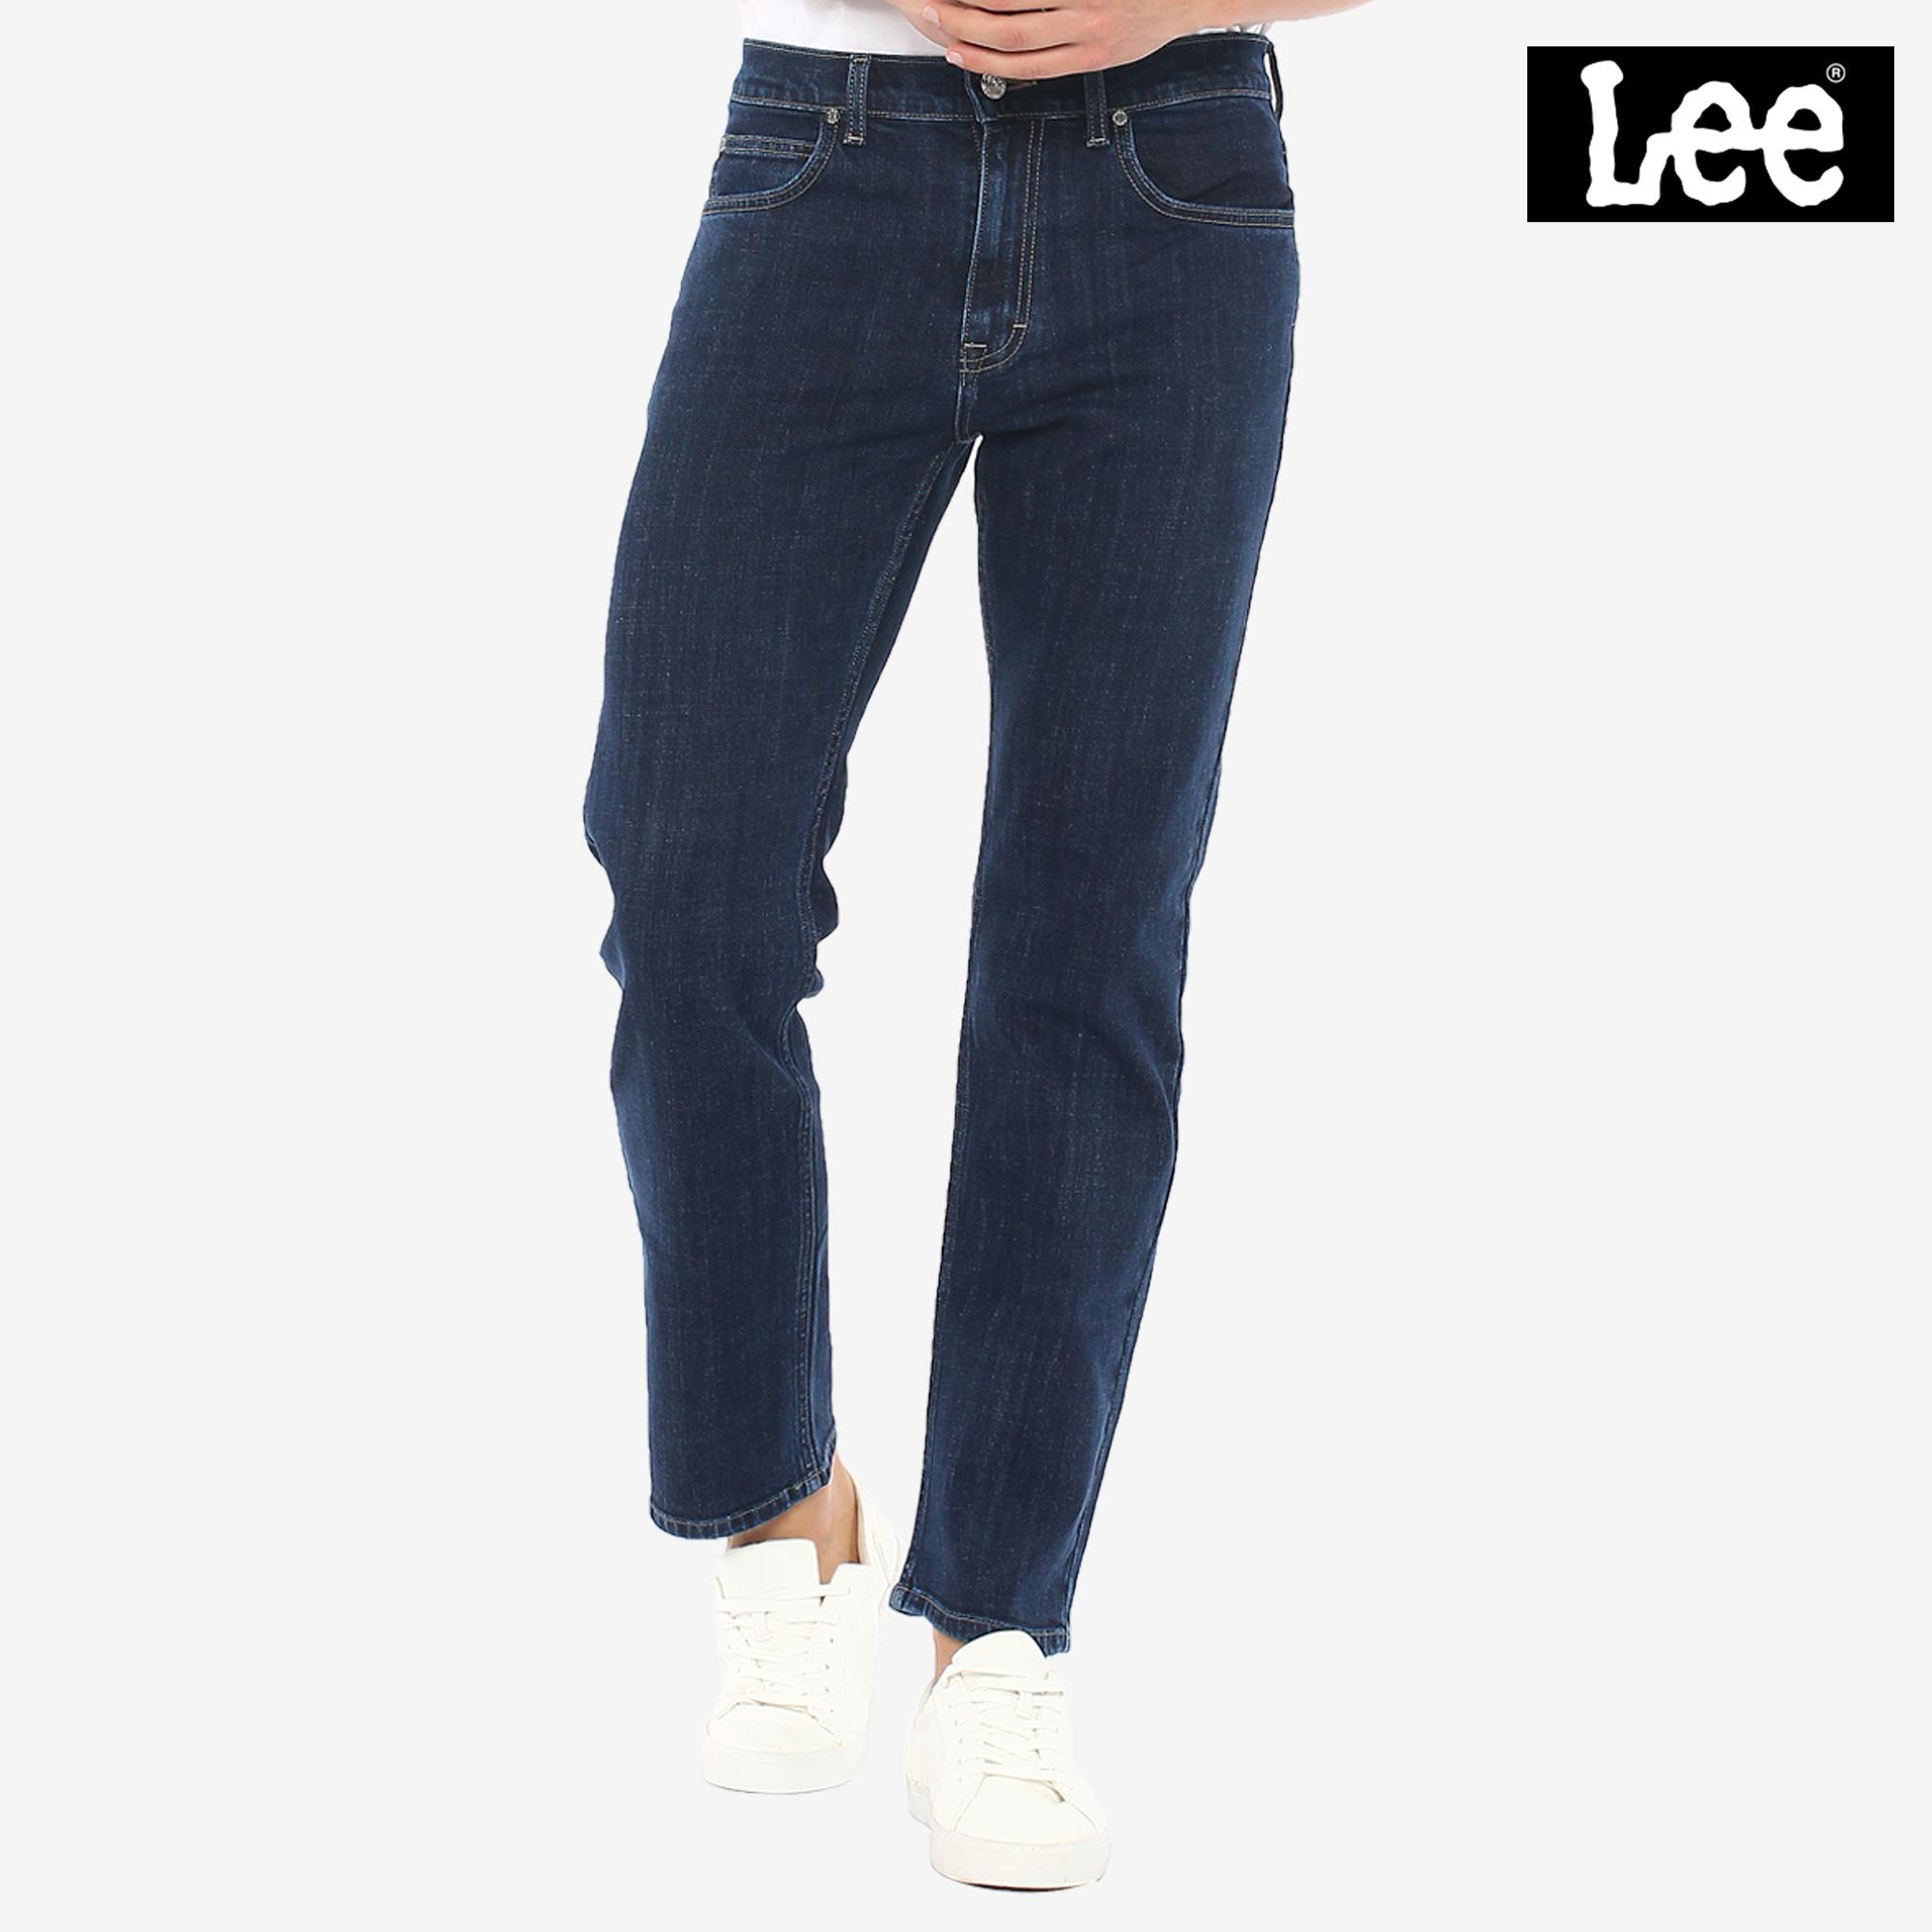 lee low rise mens jeans